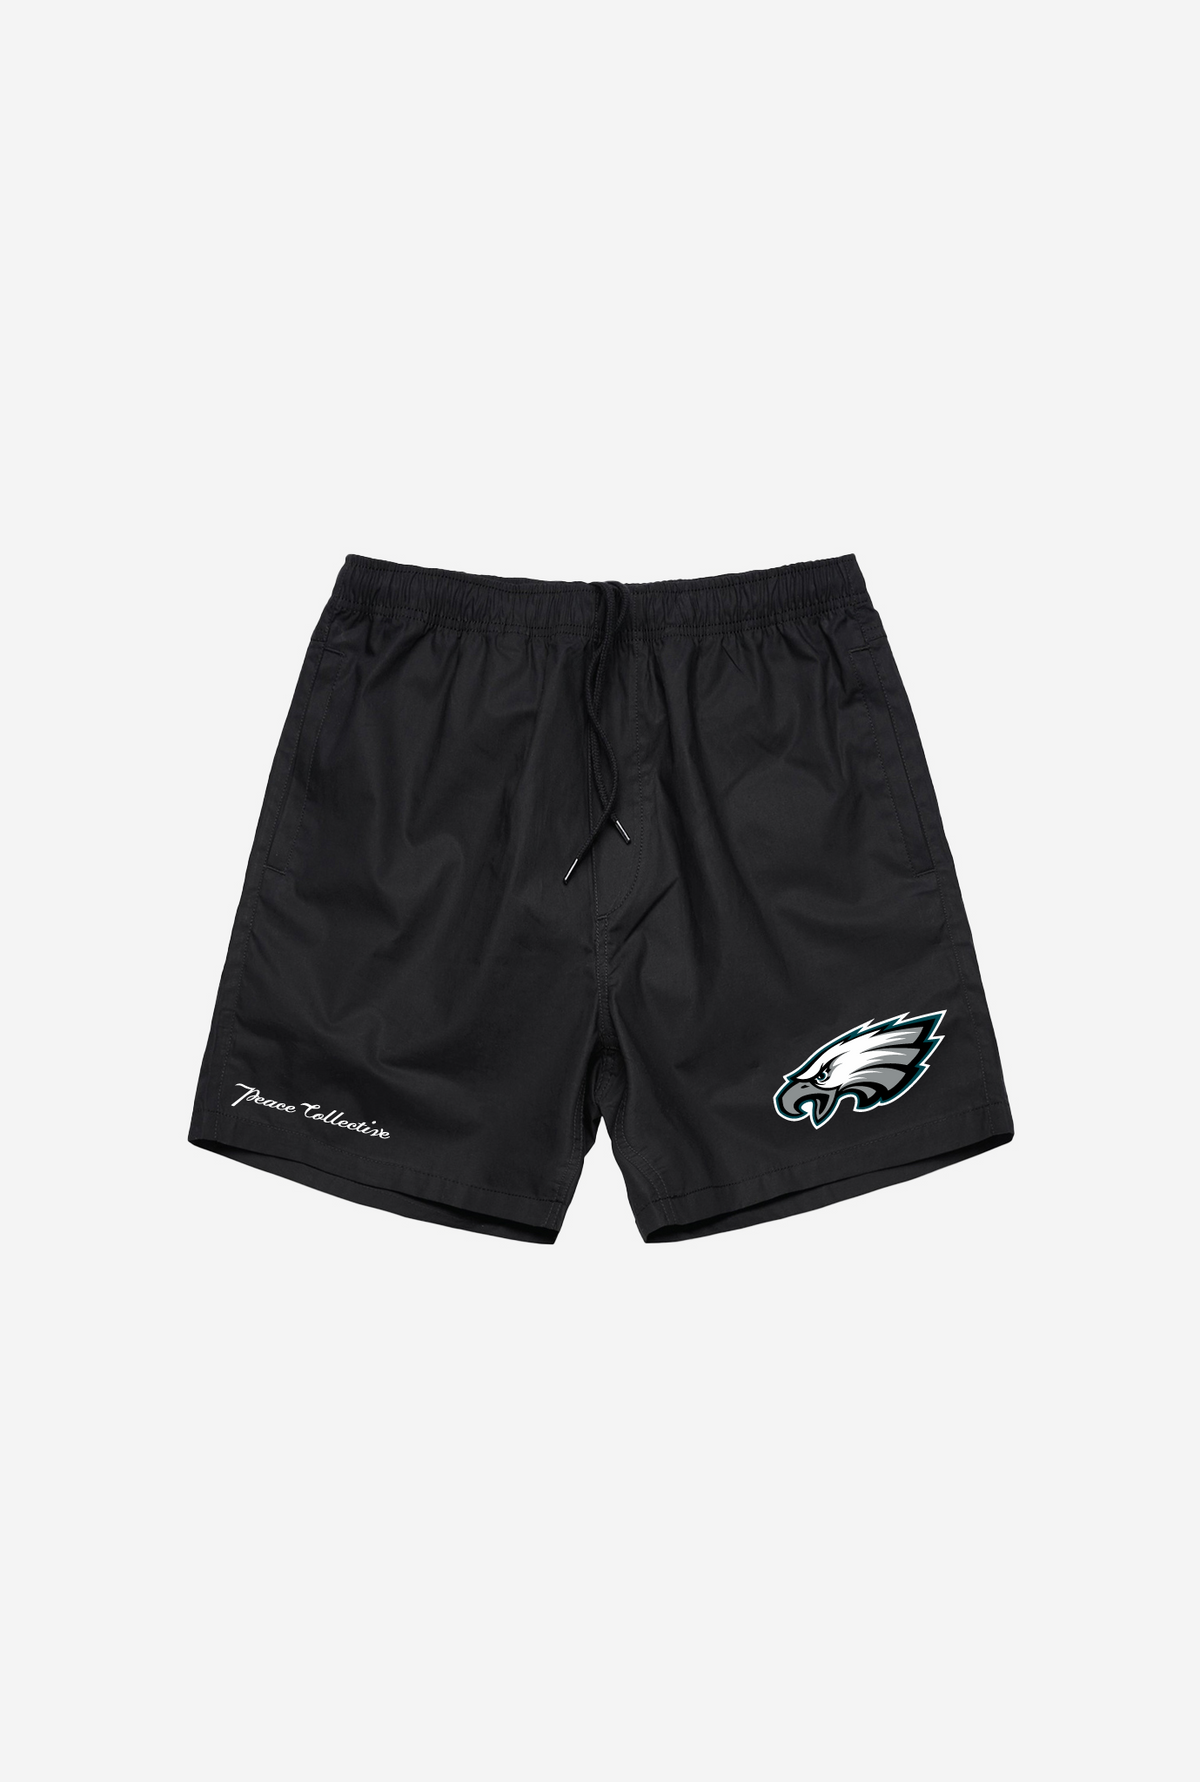 Philadelphia Eagles Shorts - Black